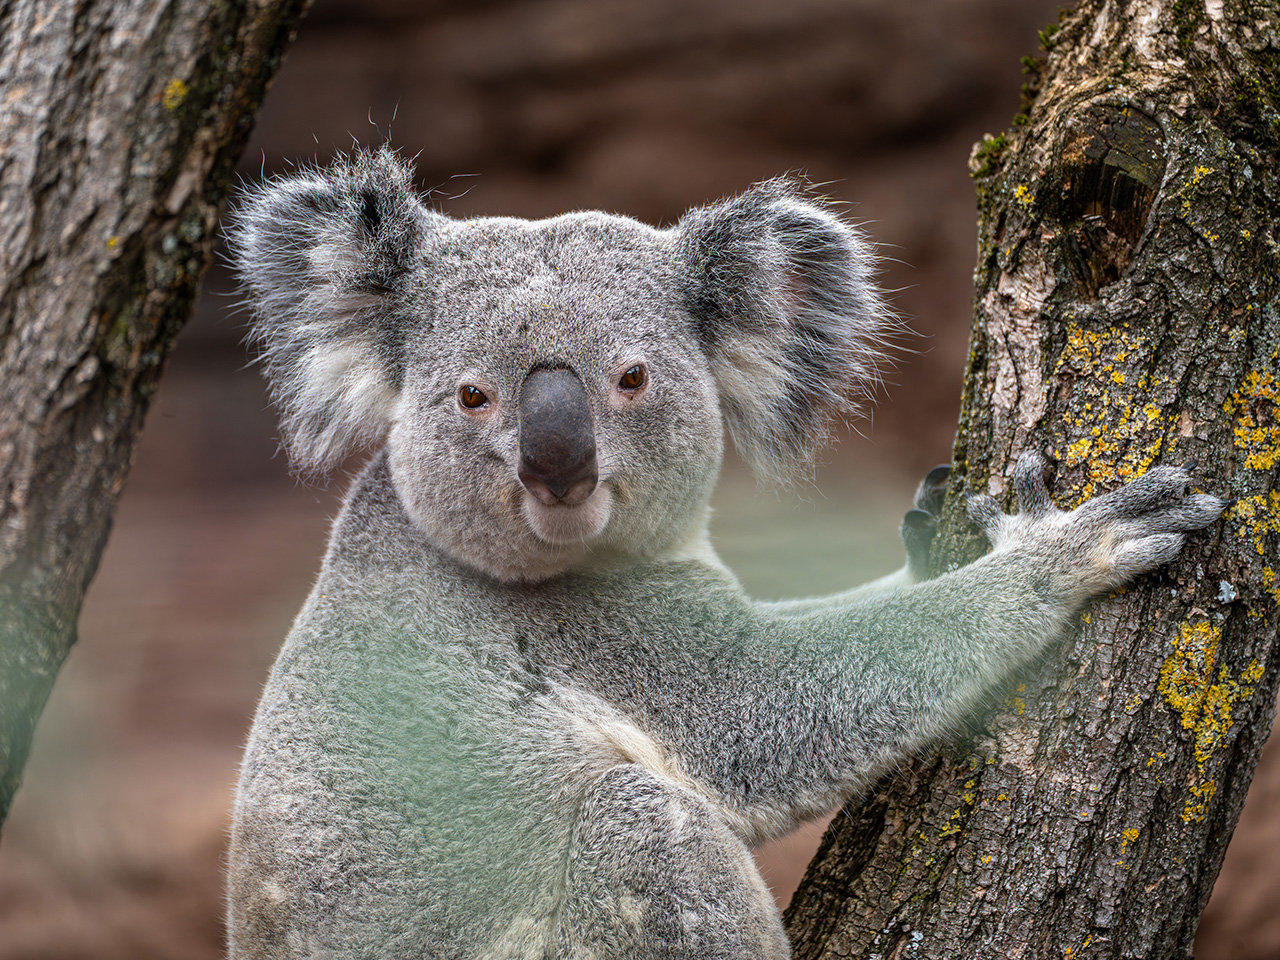 Koalabär der den Betrachter direkt anschaut und seine Pfote an einen Baumstamm anlehnt